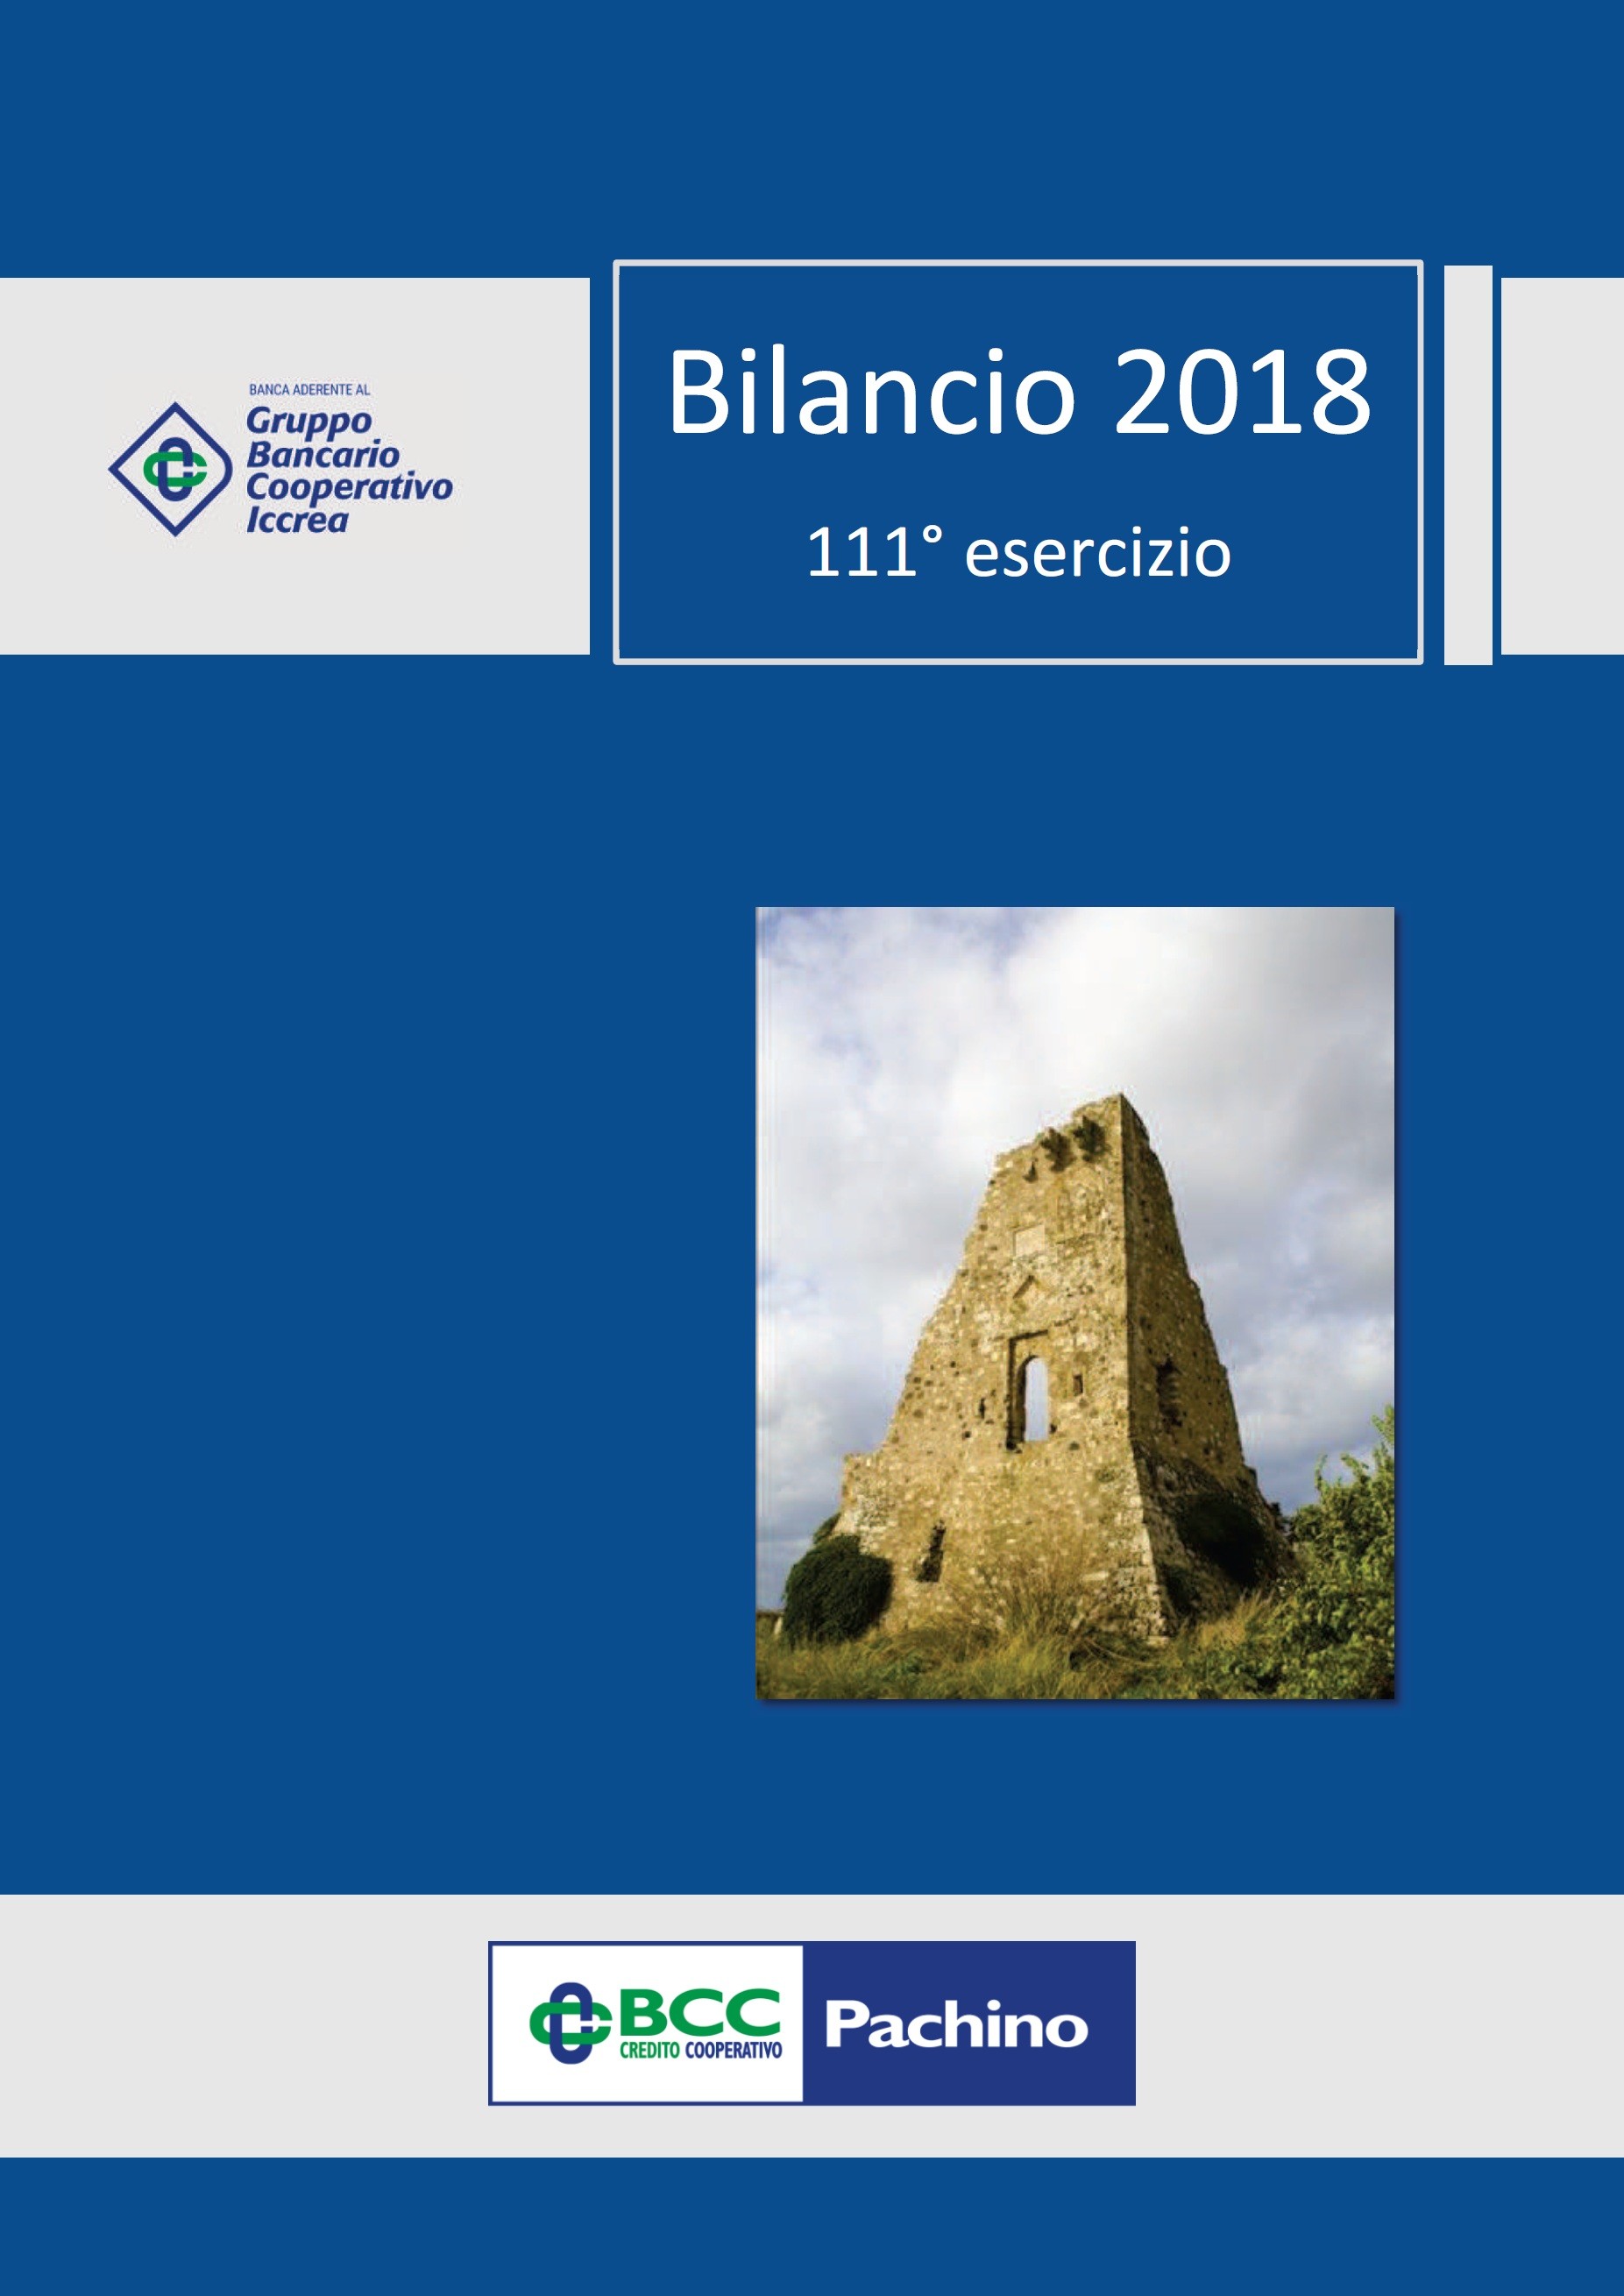 BCC Pachino - Bilancio 2018 copertina